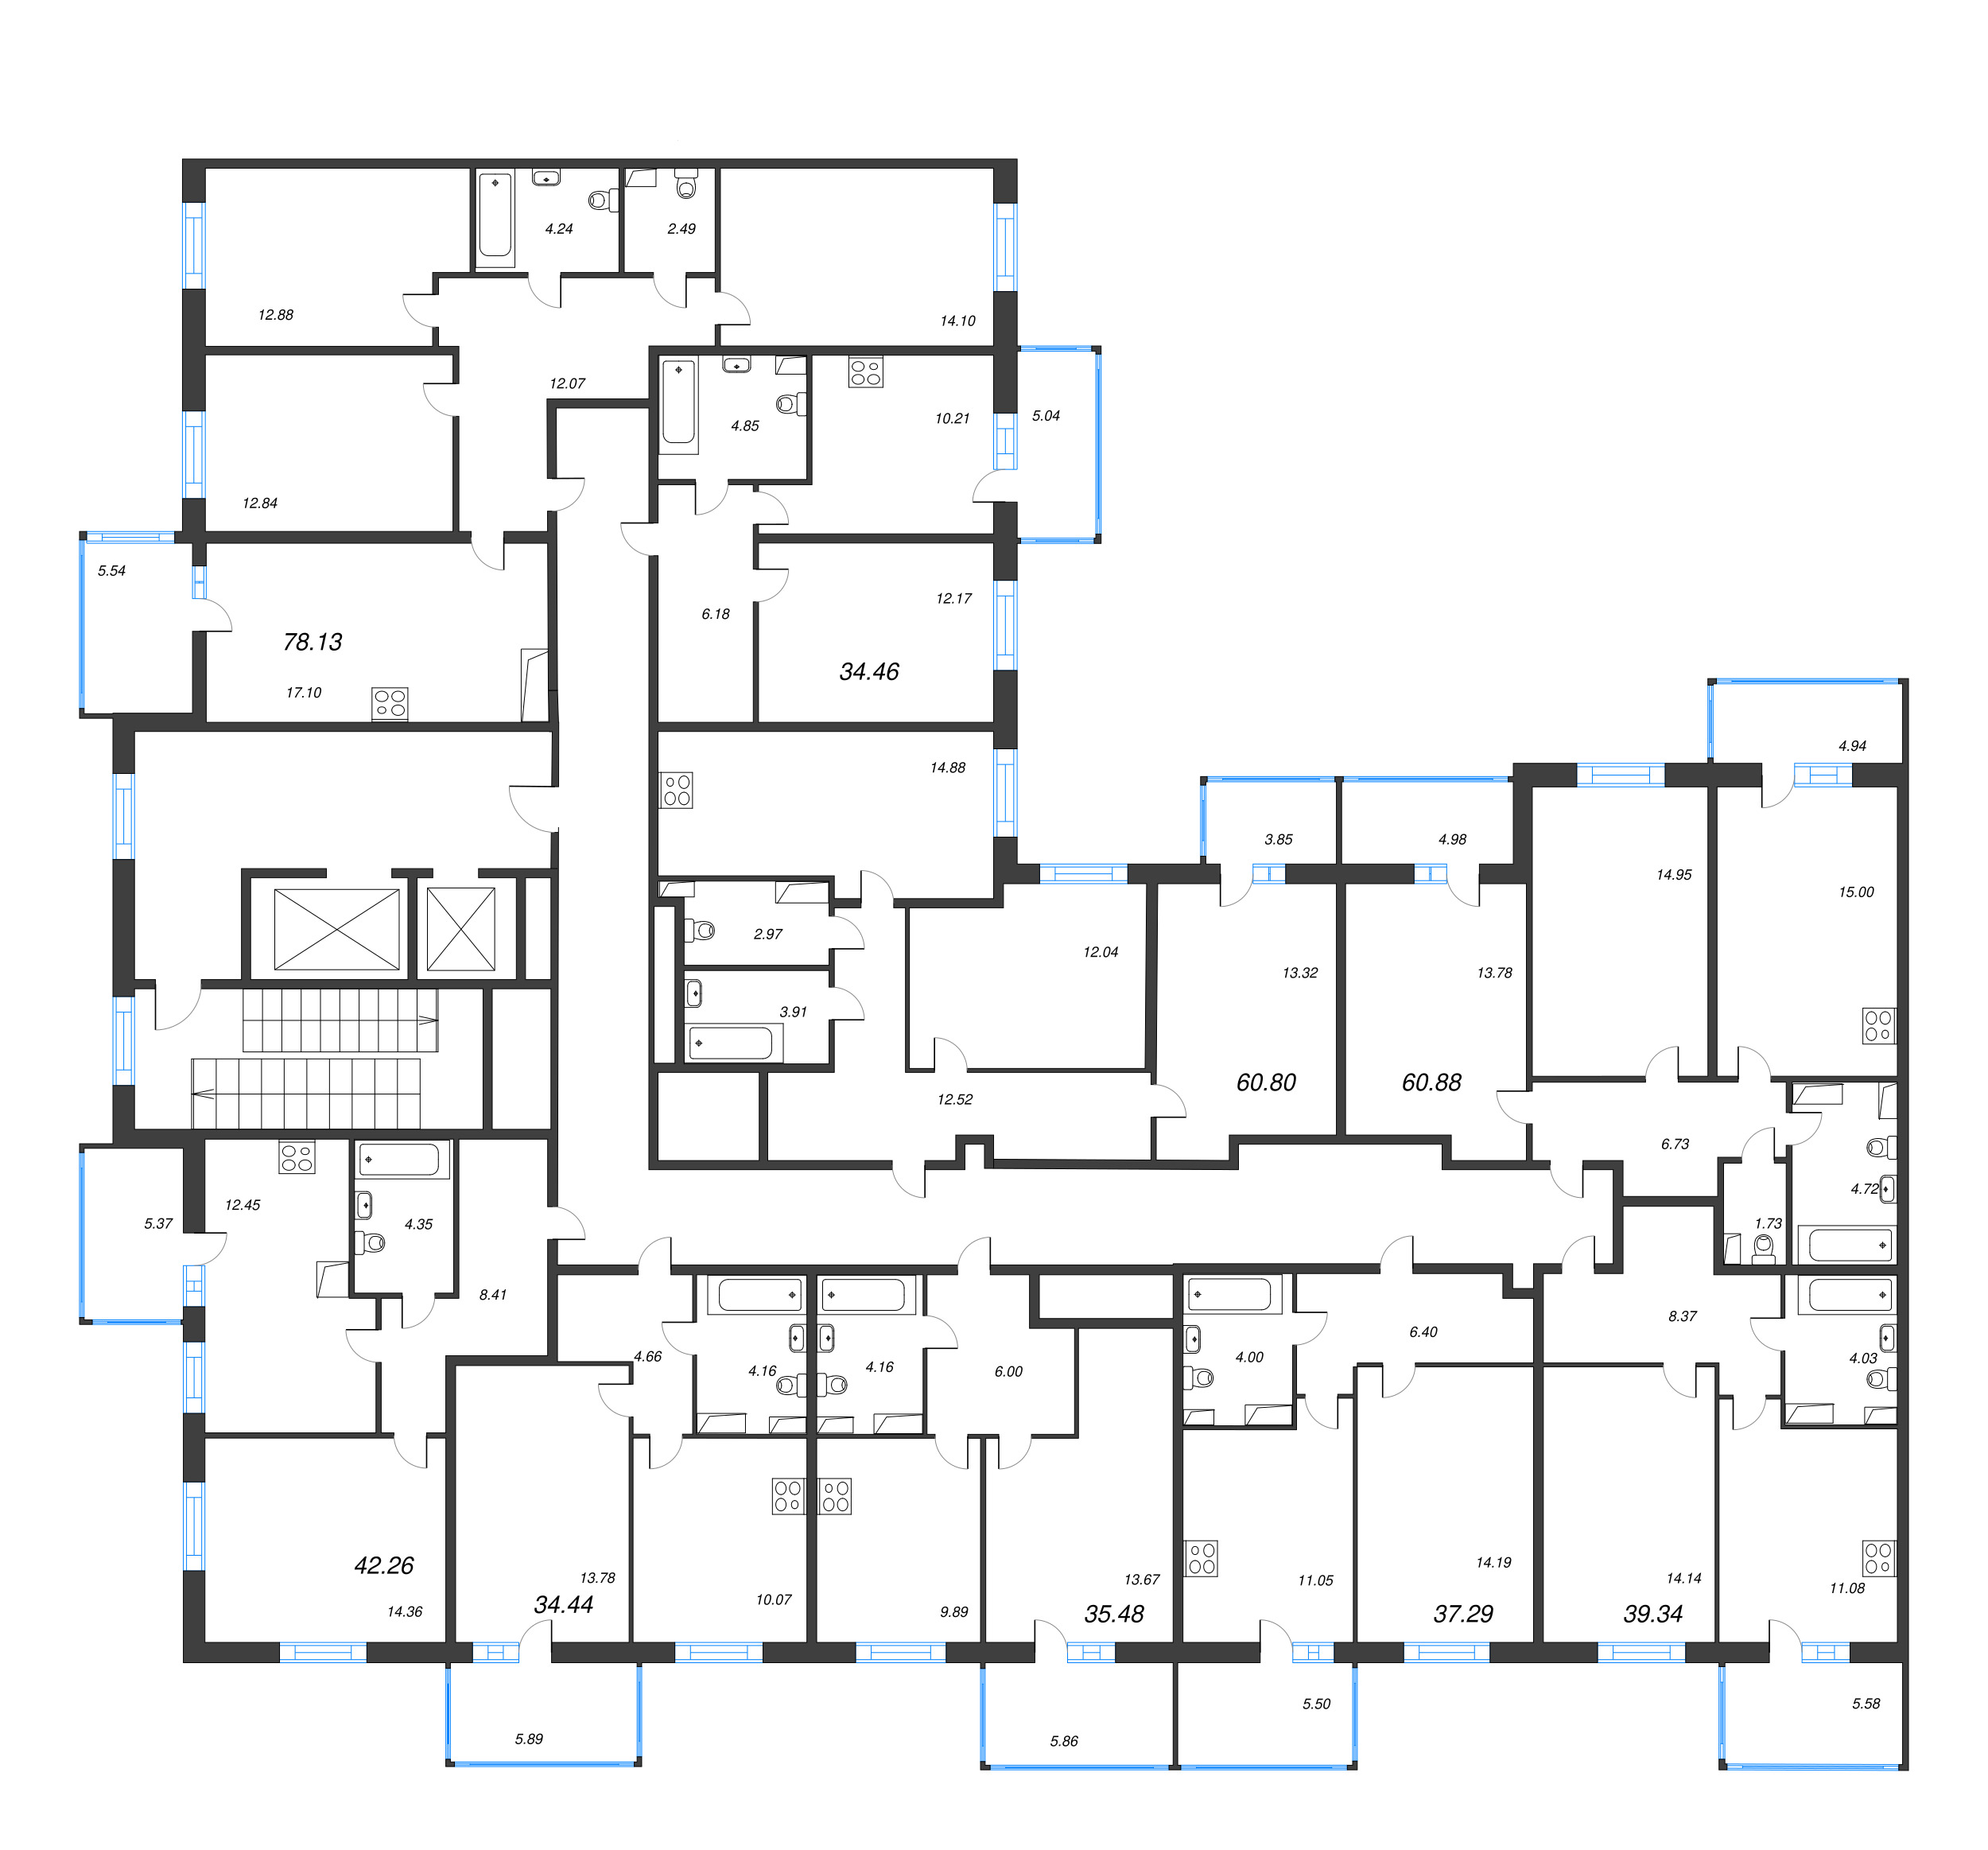 4-комнатная (Евро) квартира, 78.13 м² - планировка этажа